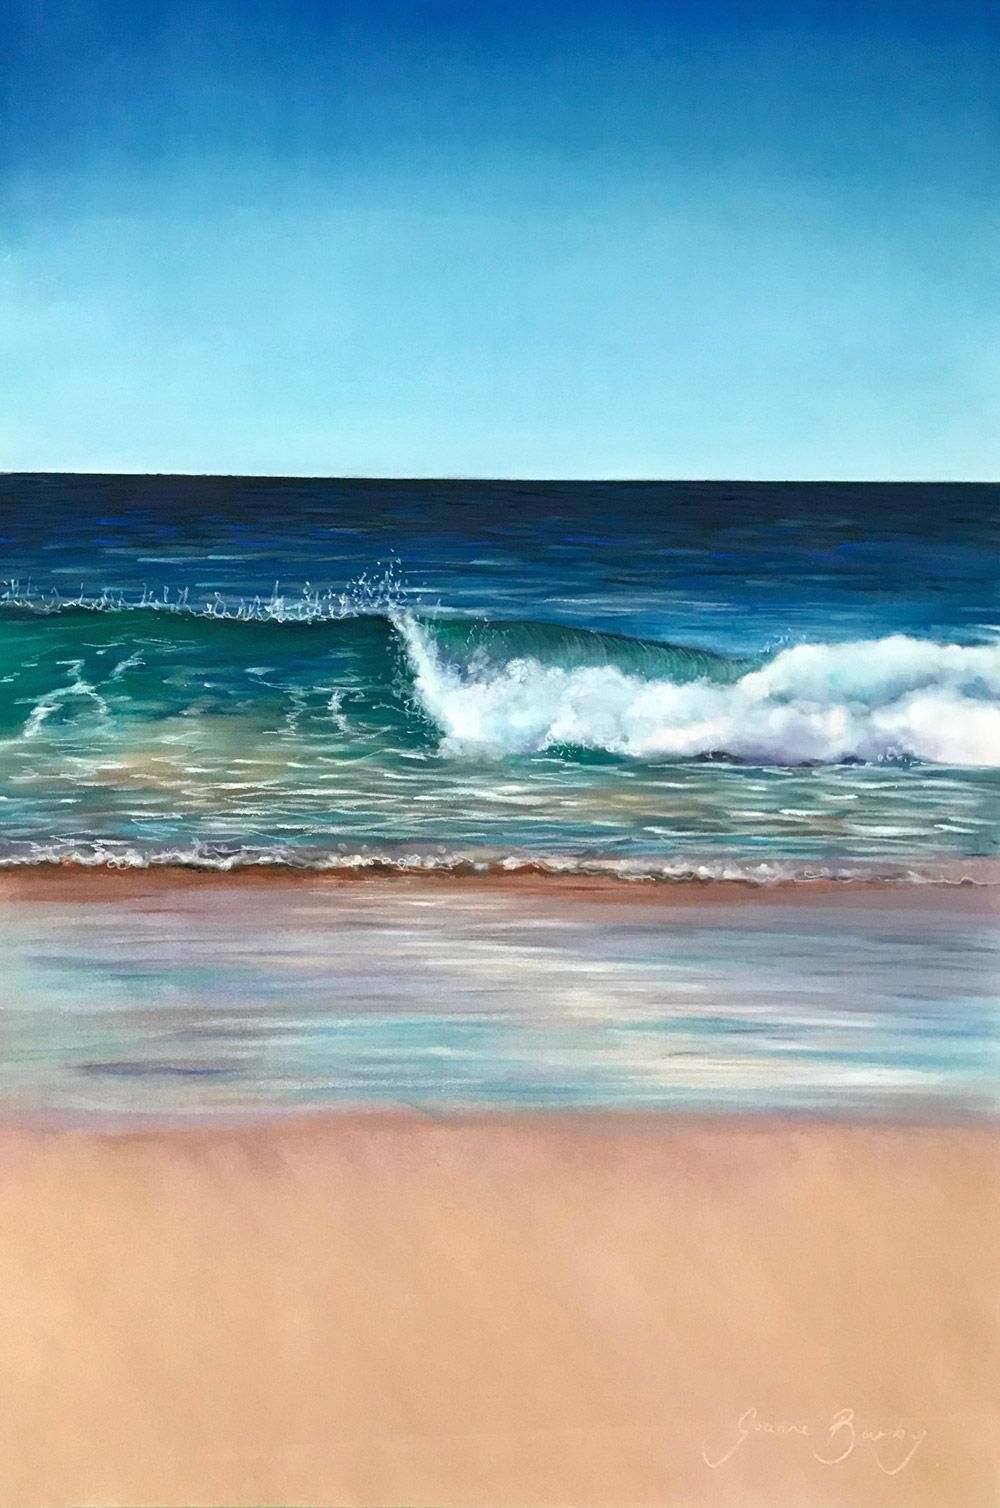 PanPastel 30252 Joanne Barby Seascape Painting Set (20 Кольорів)